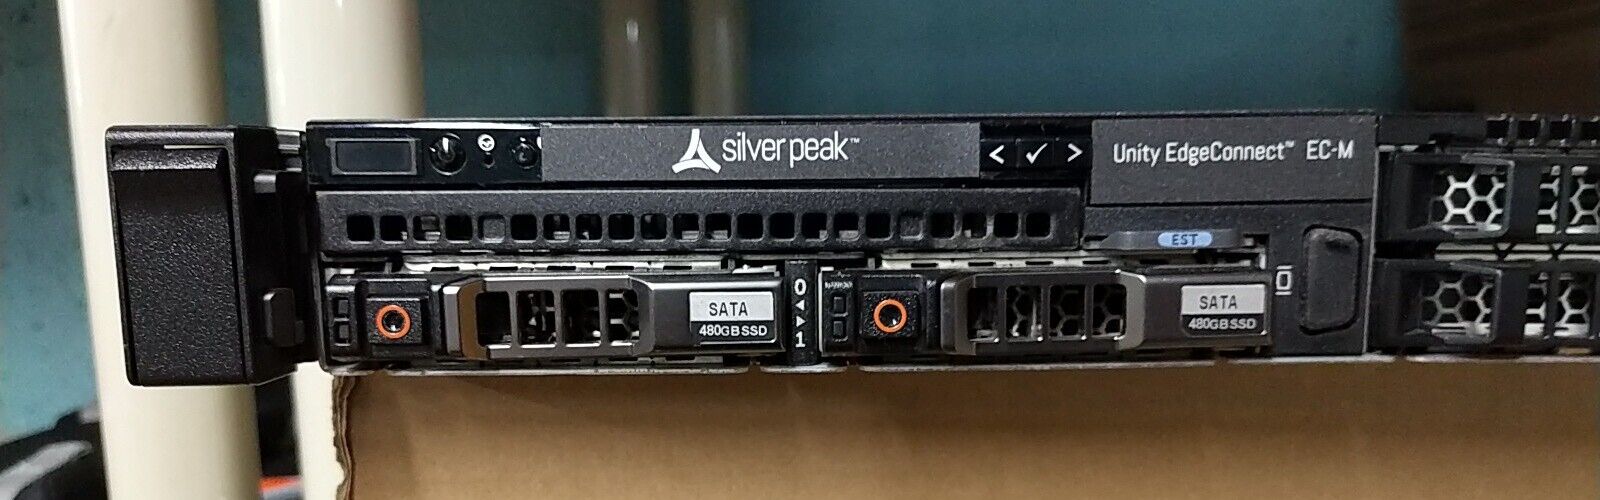 Silver Peak Unity EdgeConnect EC-M Server 2x PSU 2x 480GB SSD